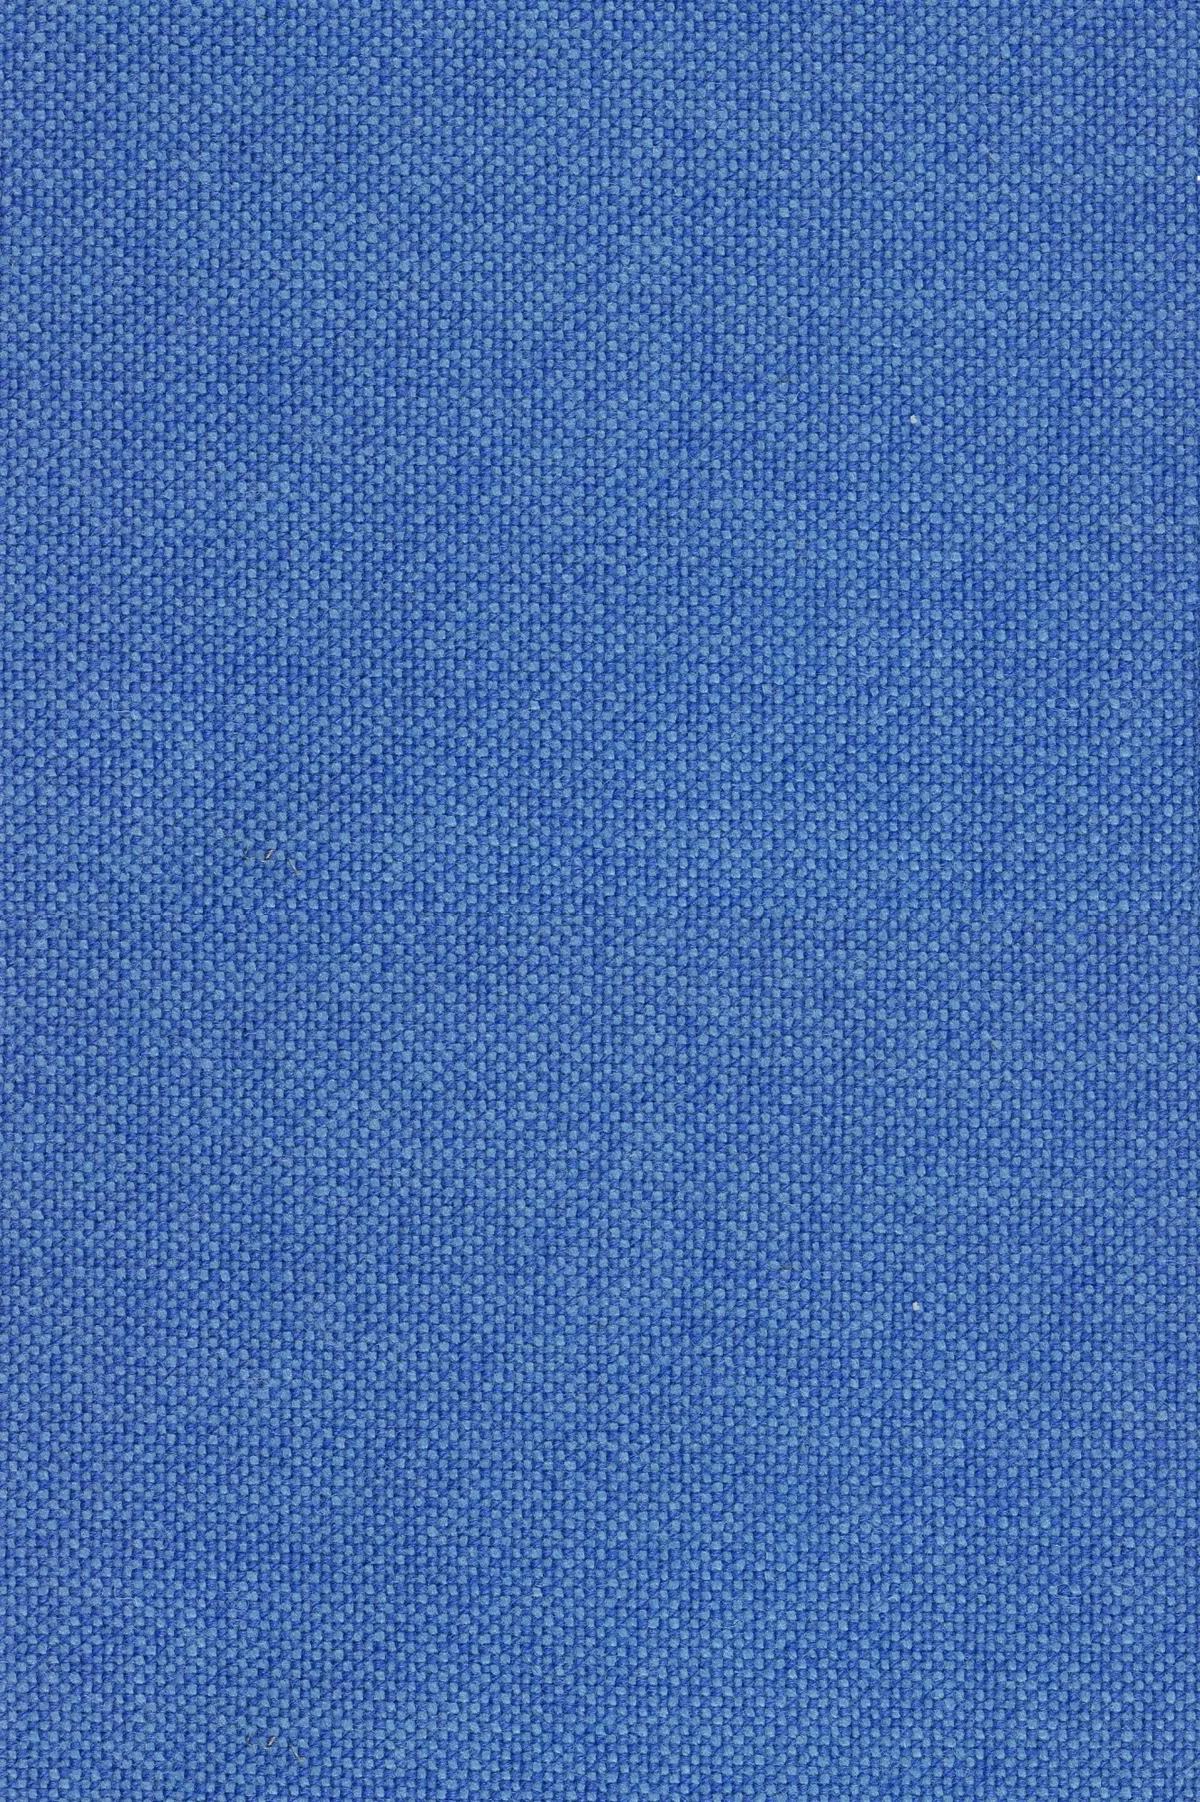 Fabric sample Hallingdal 65 733 blue